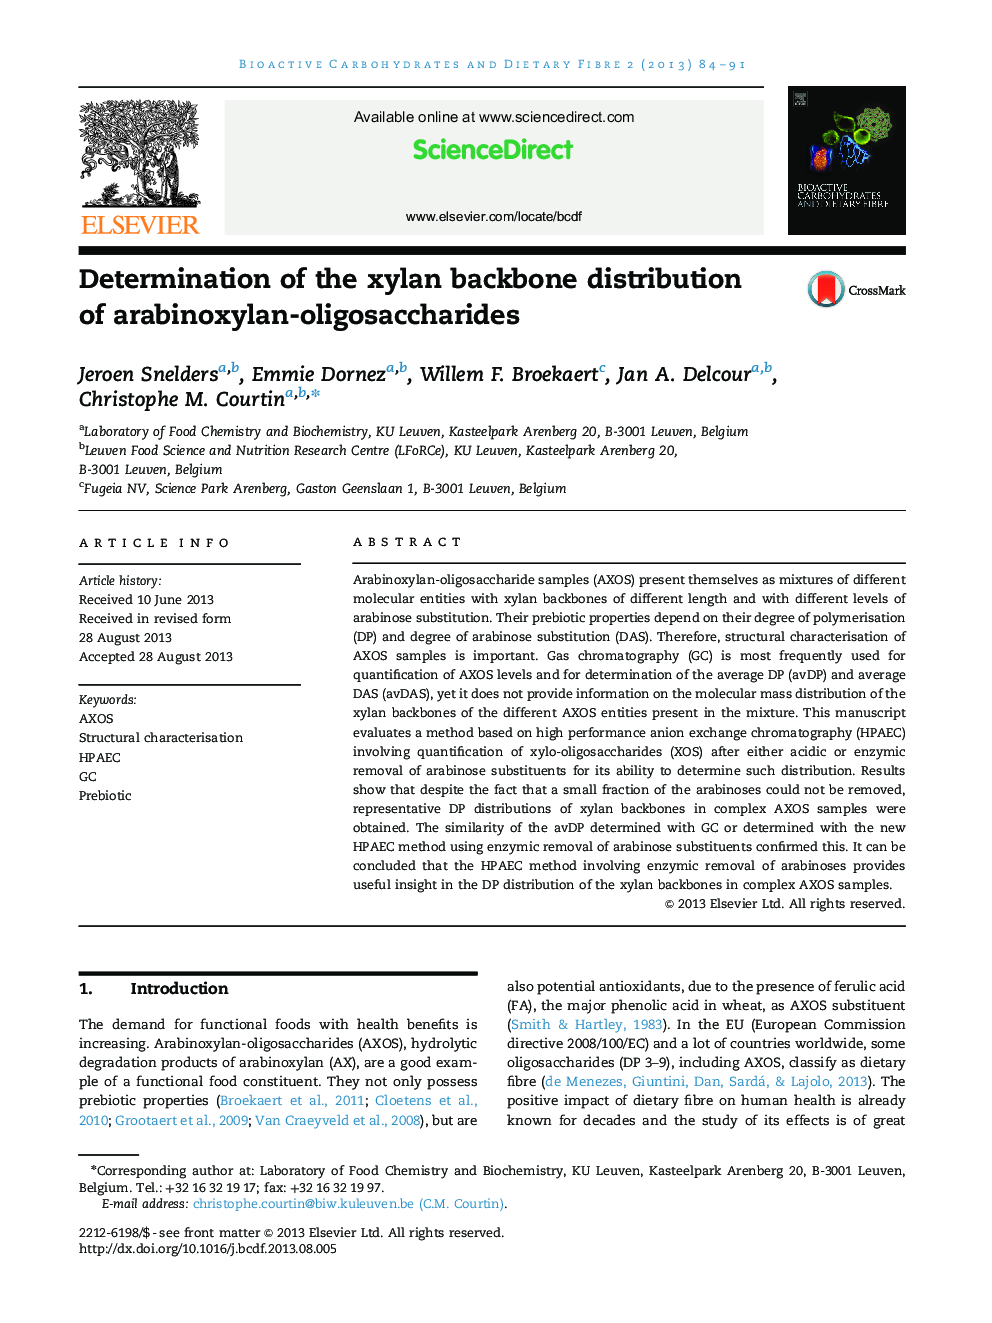 Determination of the xylan backbone distribution of arabinoxylan-oligosaccharides